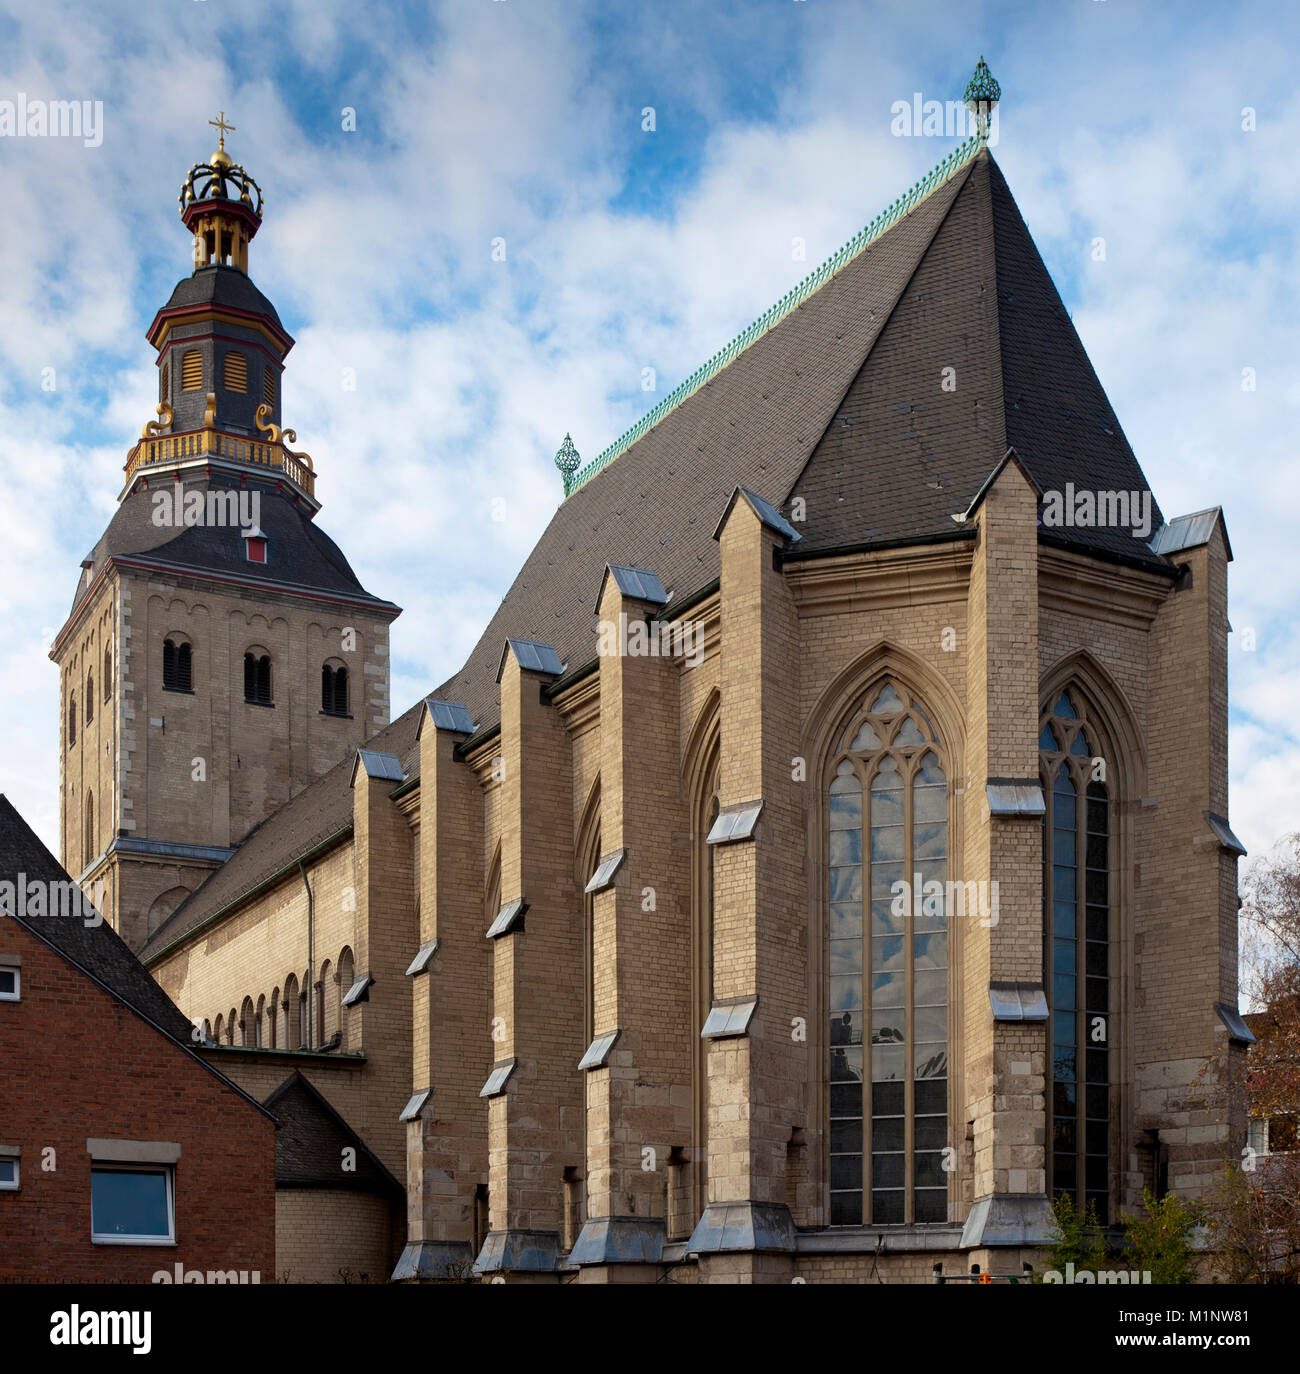 Germany, Cologne, the romanesque church St. Ursula.  Deutschland, Koeln, die romanische Kirche St. Ursula. Stock Photo